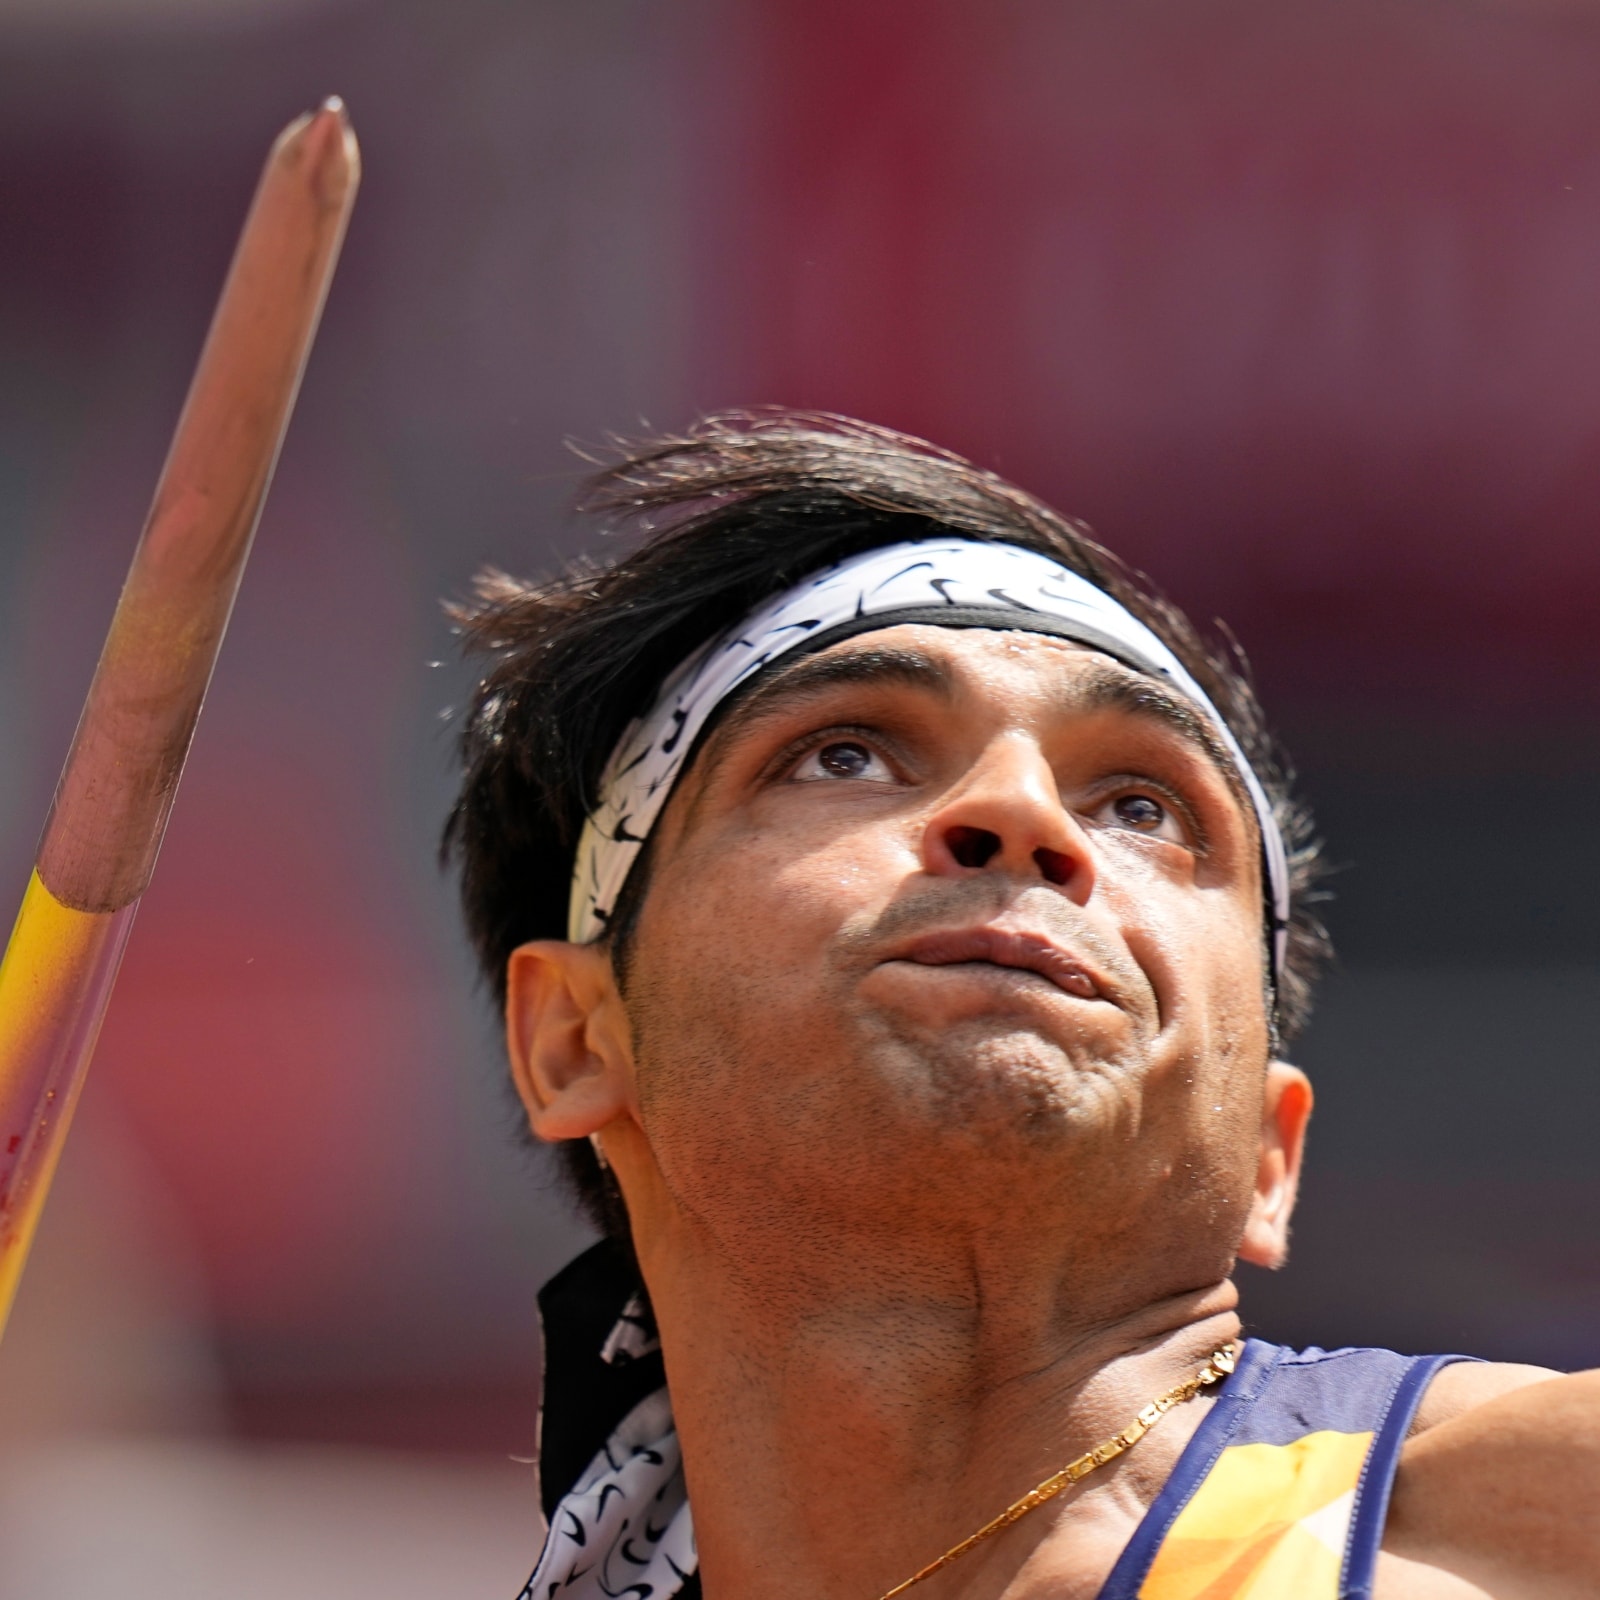 Tokyo Olympics: Neeraj Chopra's Men's Javelin Final, Live Streaming and Broadcast Details